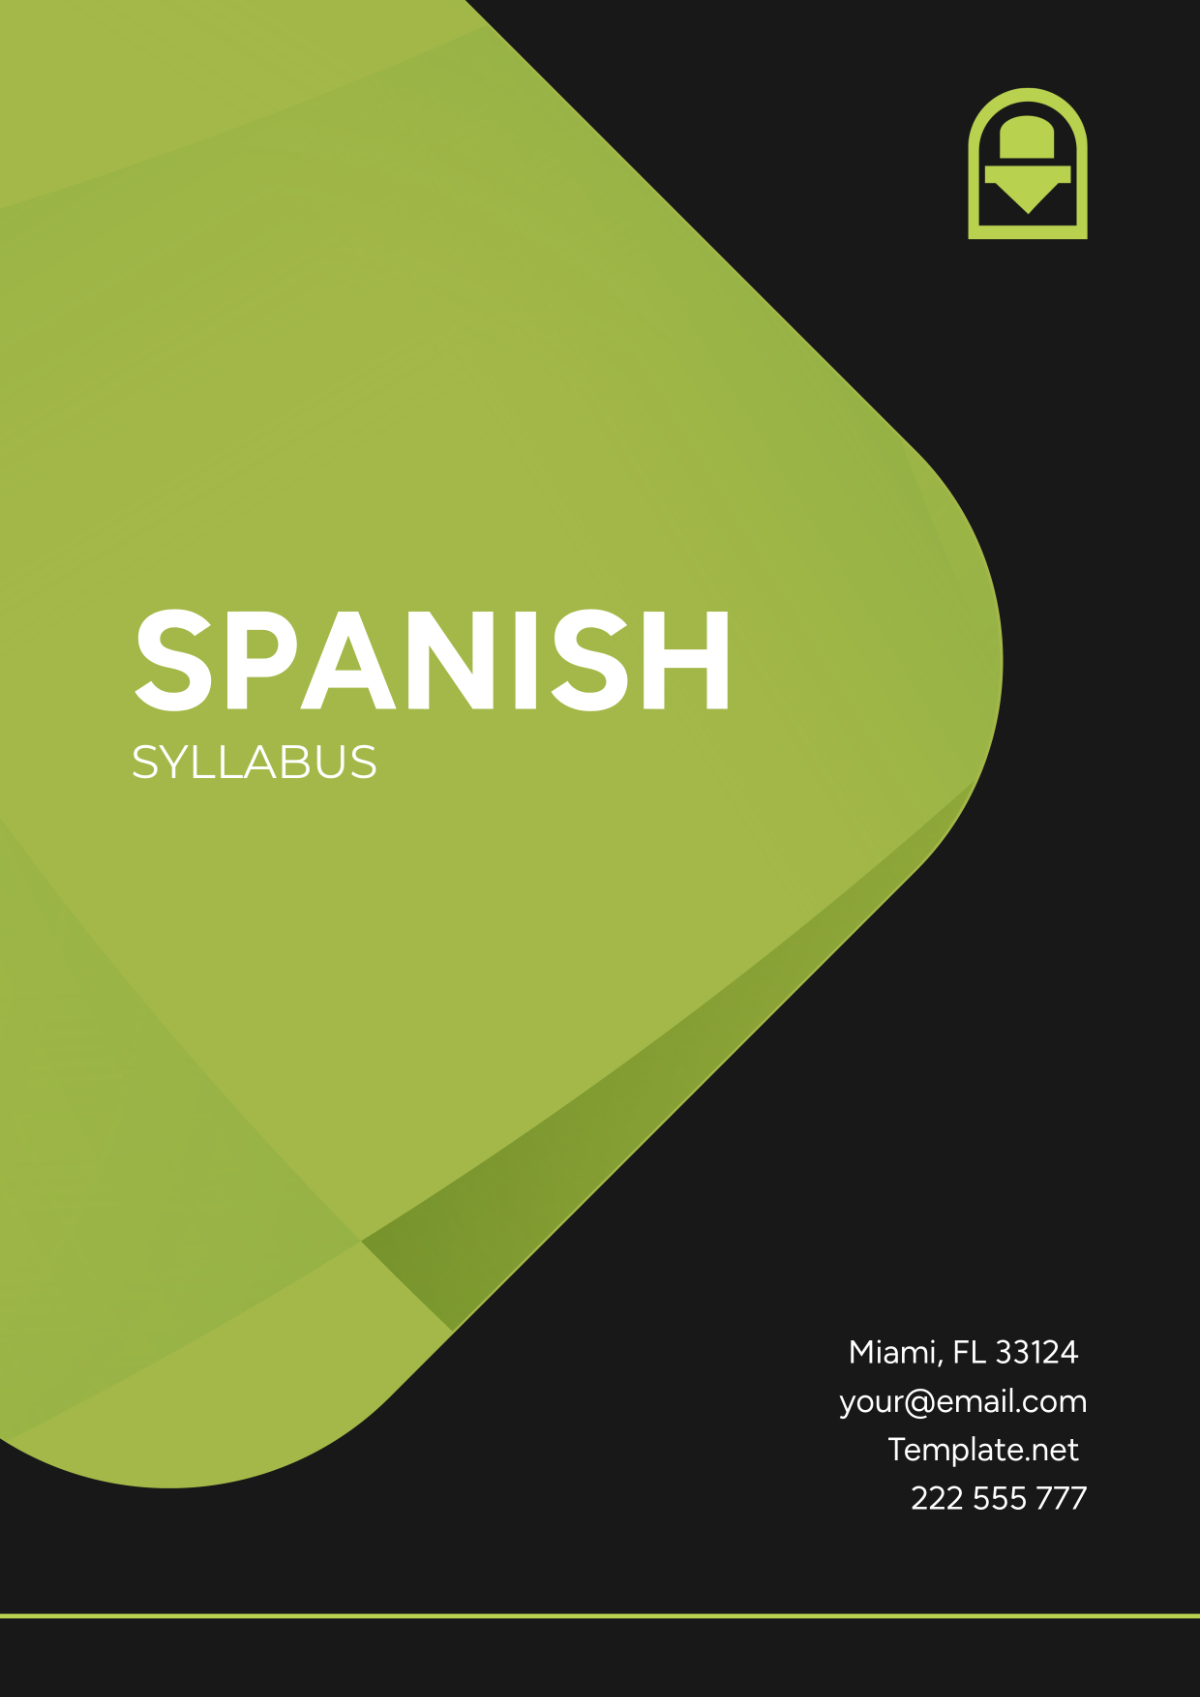 Spanish Syllabus Template